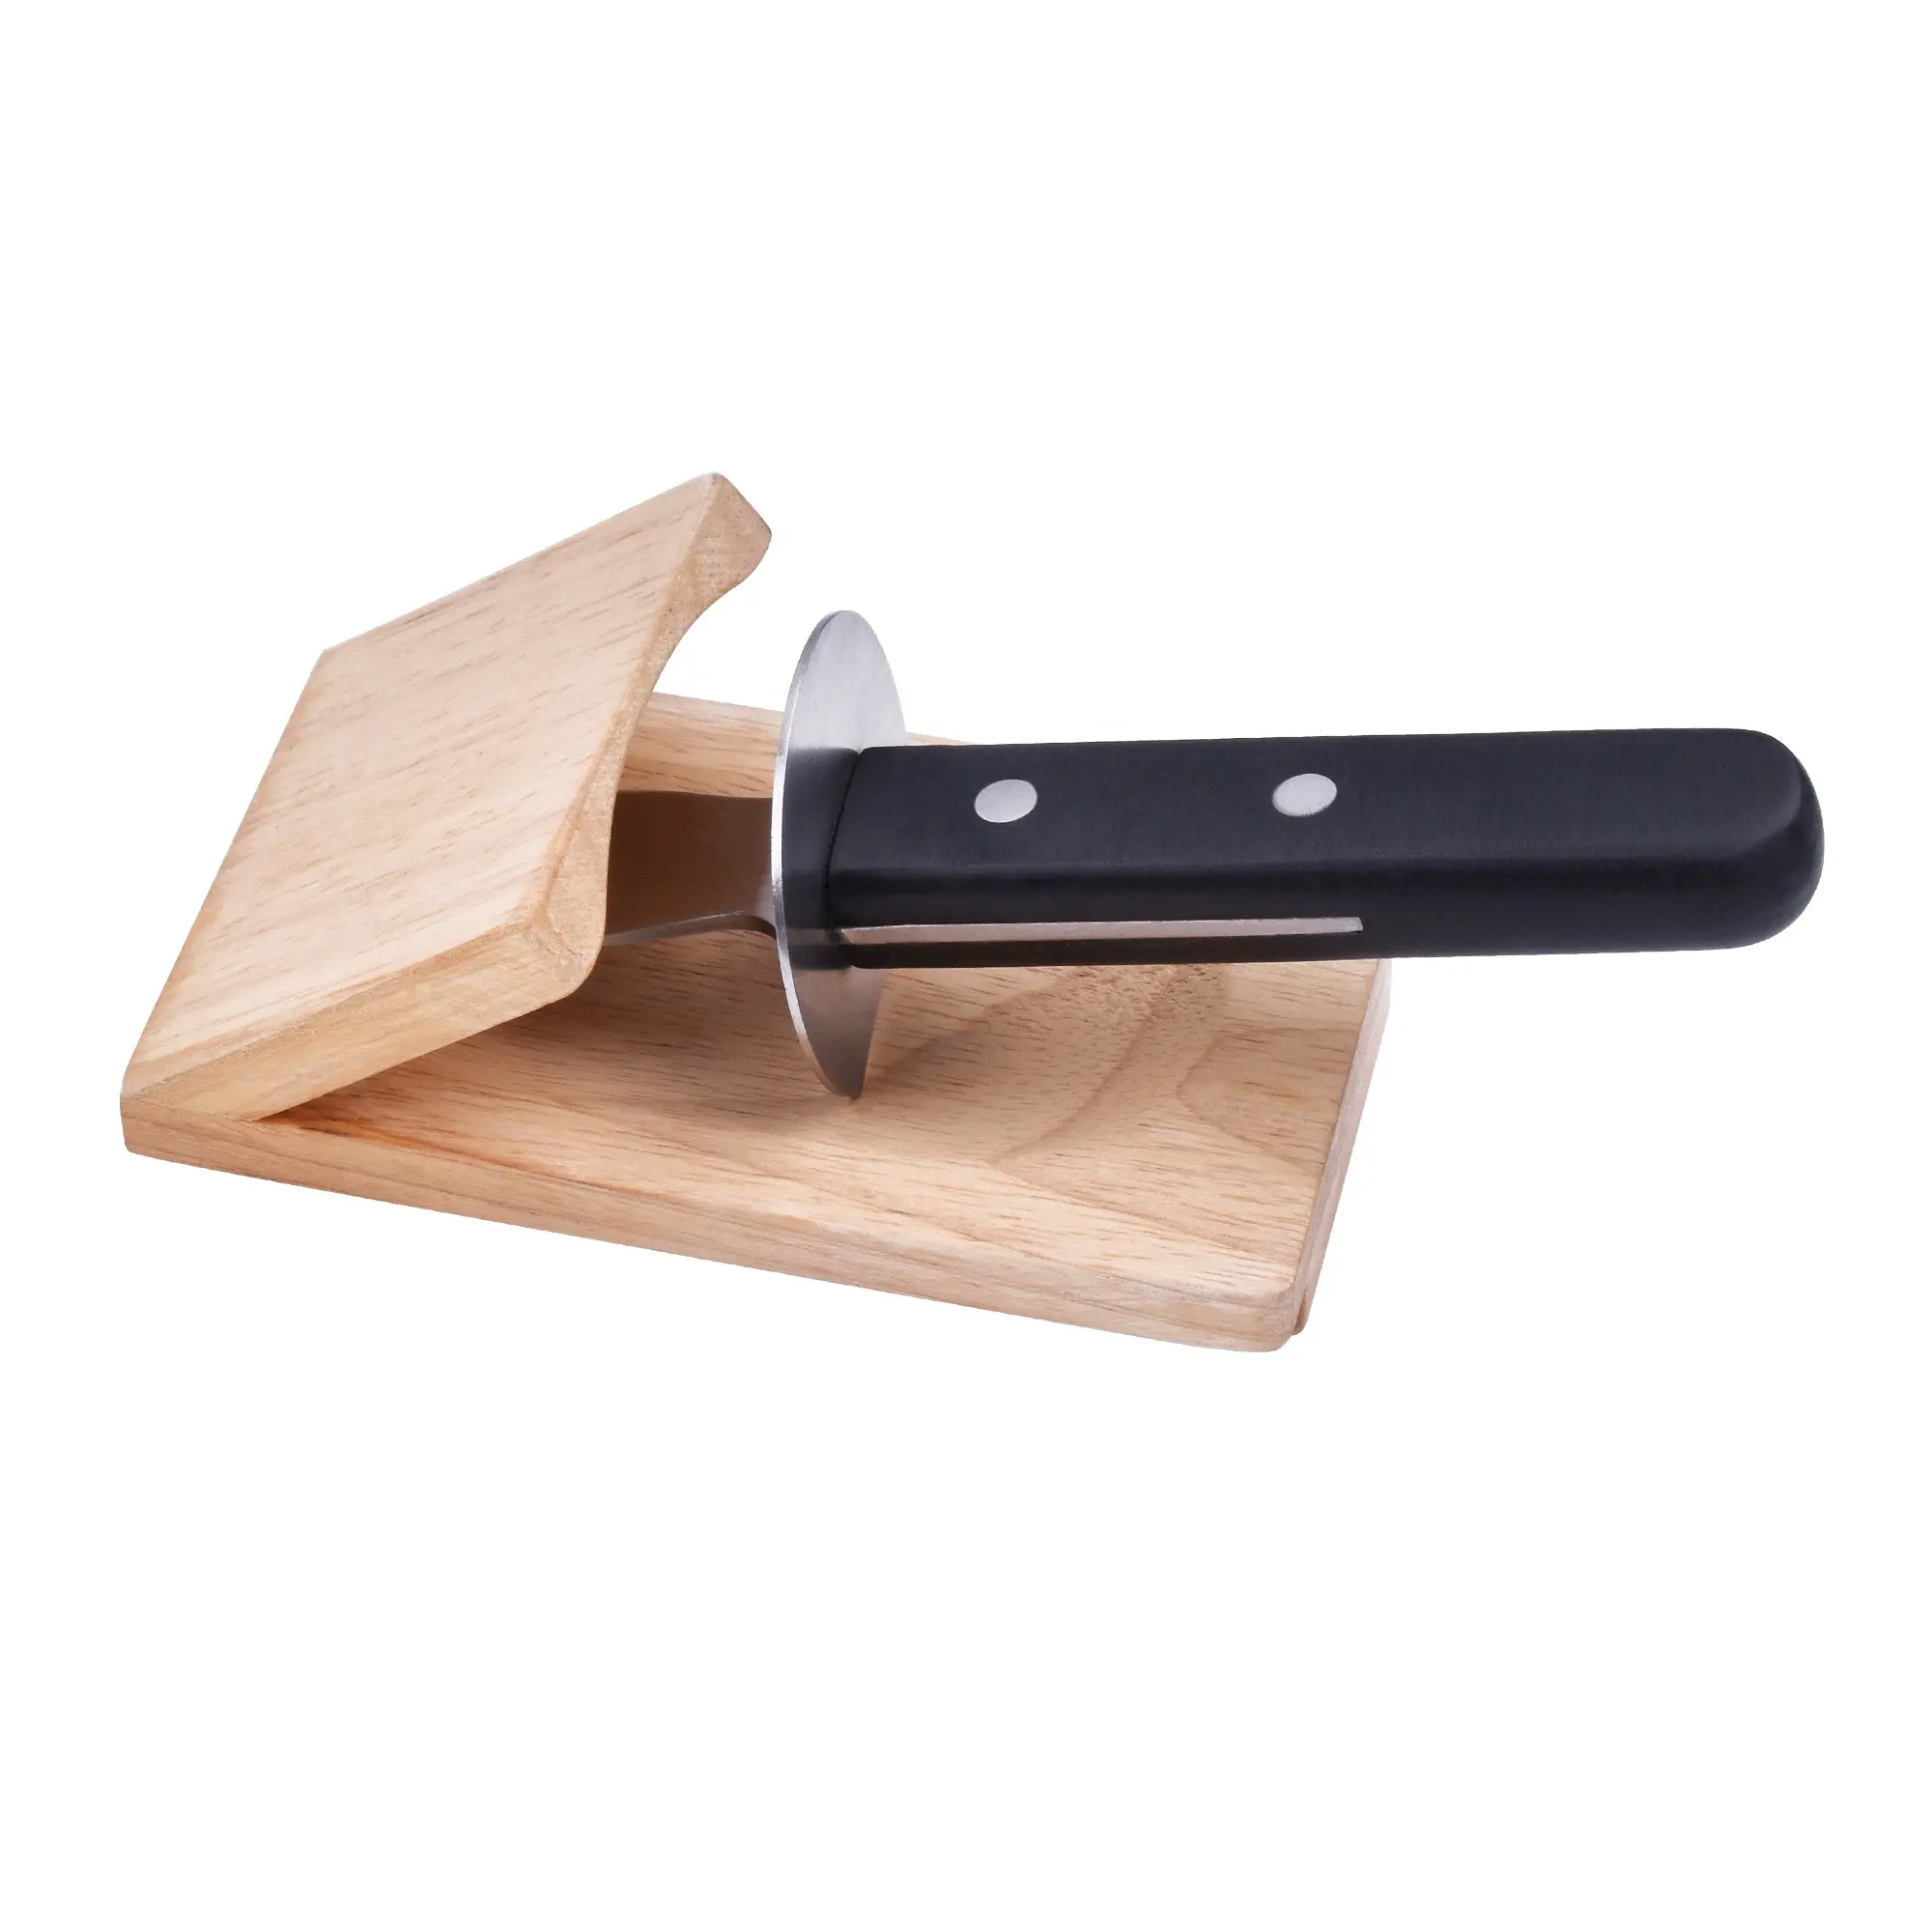 Oyster Knife Set IN STOCK Premium Quality Oyster Shucking Knives Oyster Shucking Clamp Oyster Knife Shucker Set